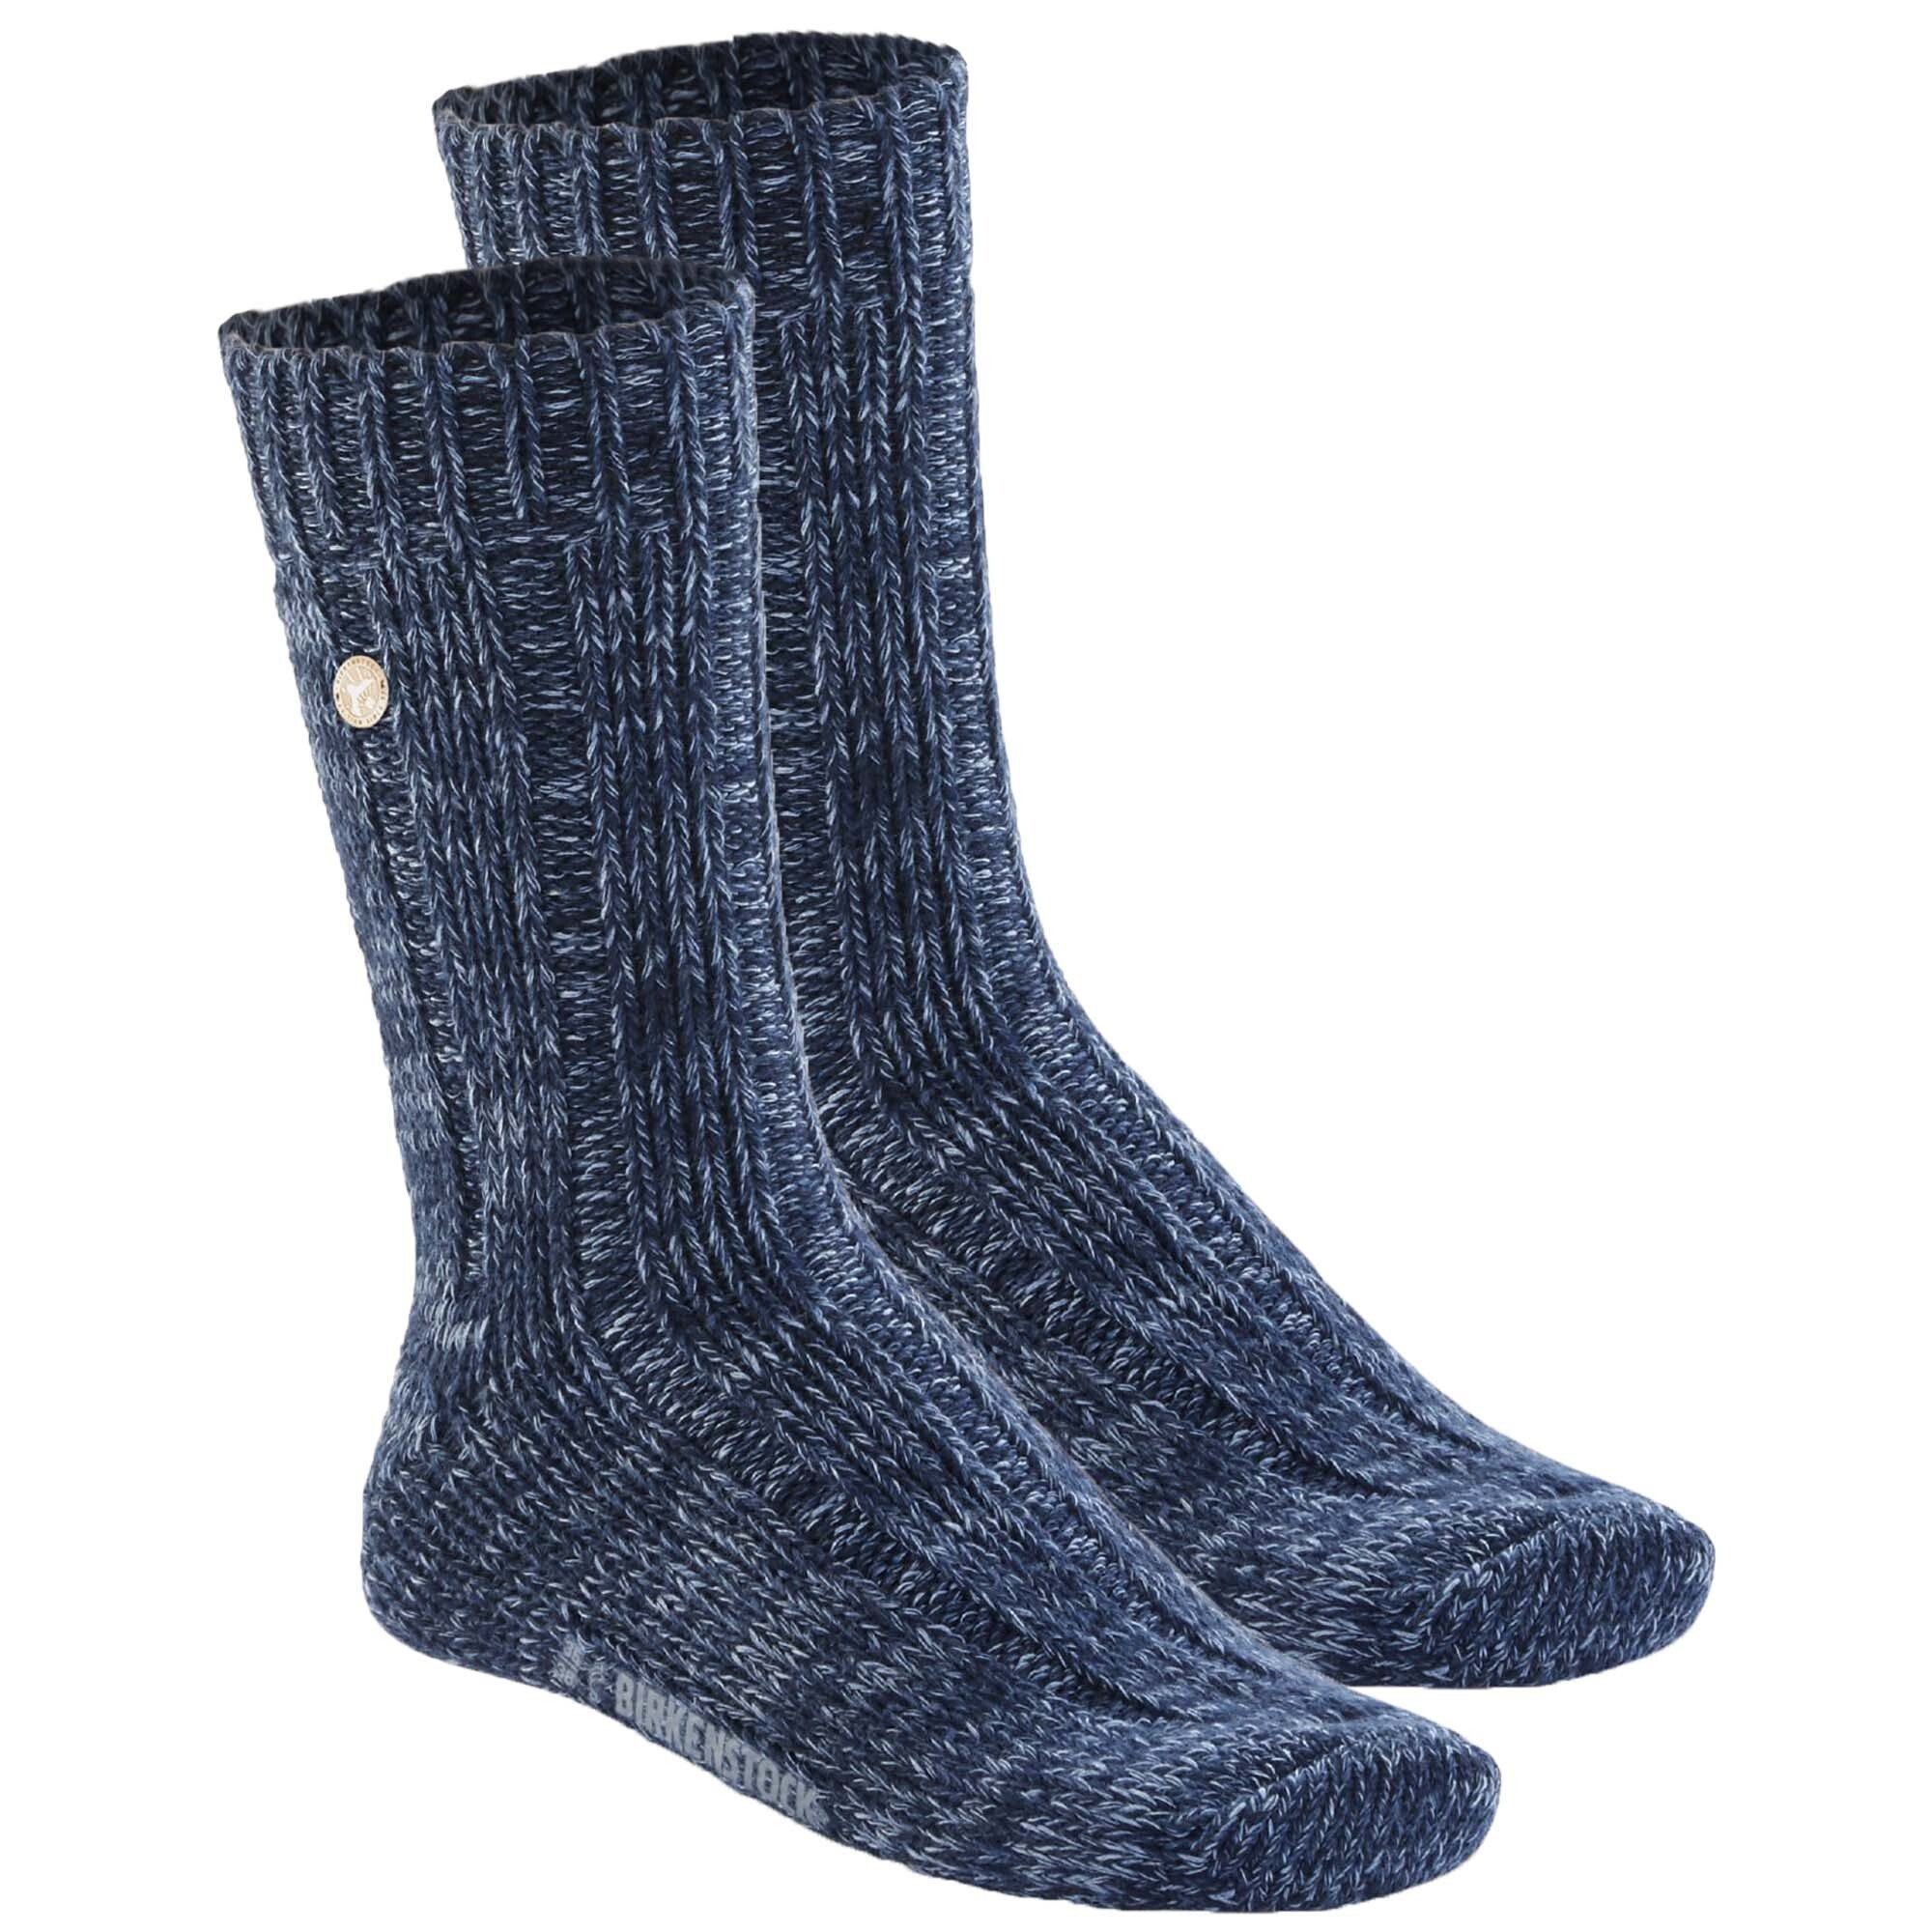 Birkenstock Kurzsocken Damen Socken, 2er Pack - Strumpf, Cotton Twist Blau